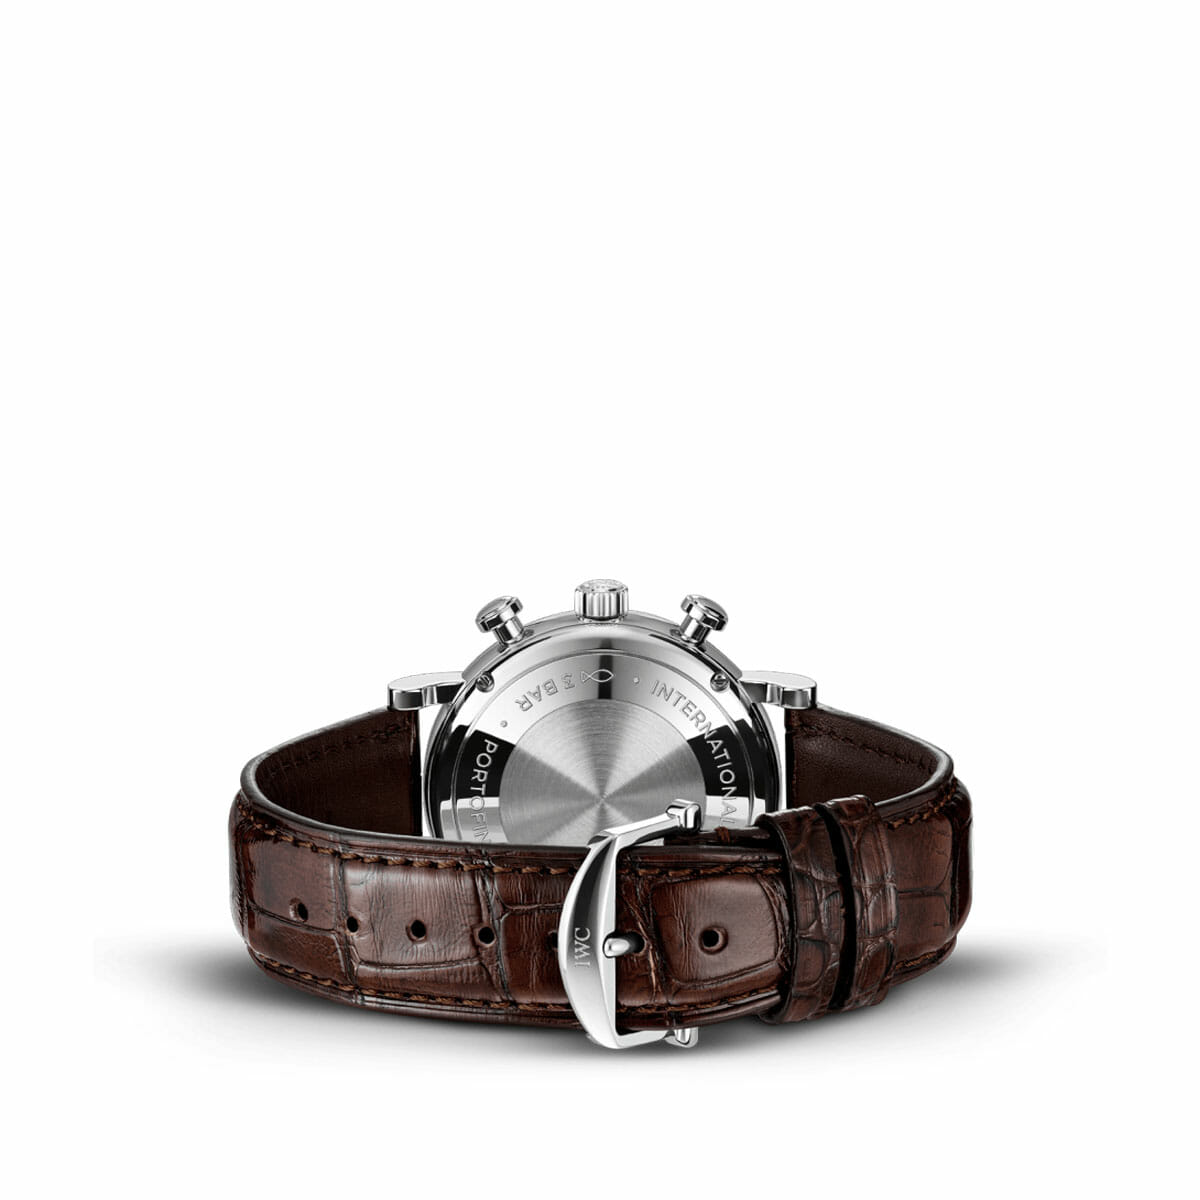 Portofino Chronograph 39mm Watch